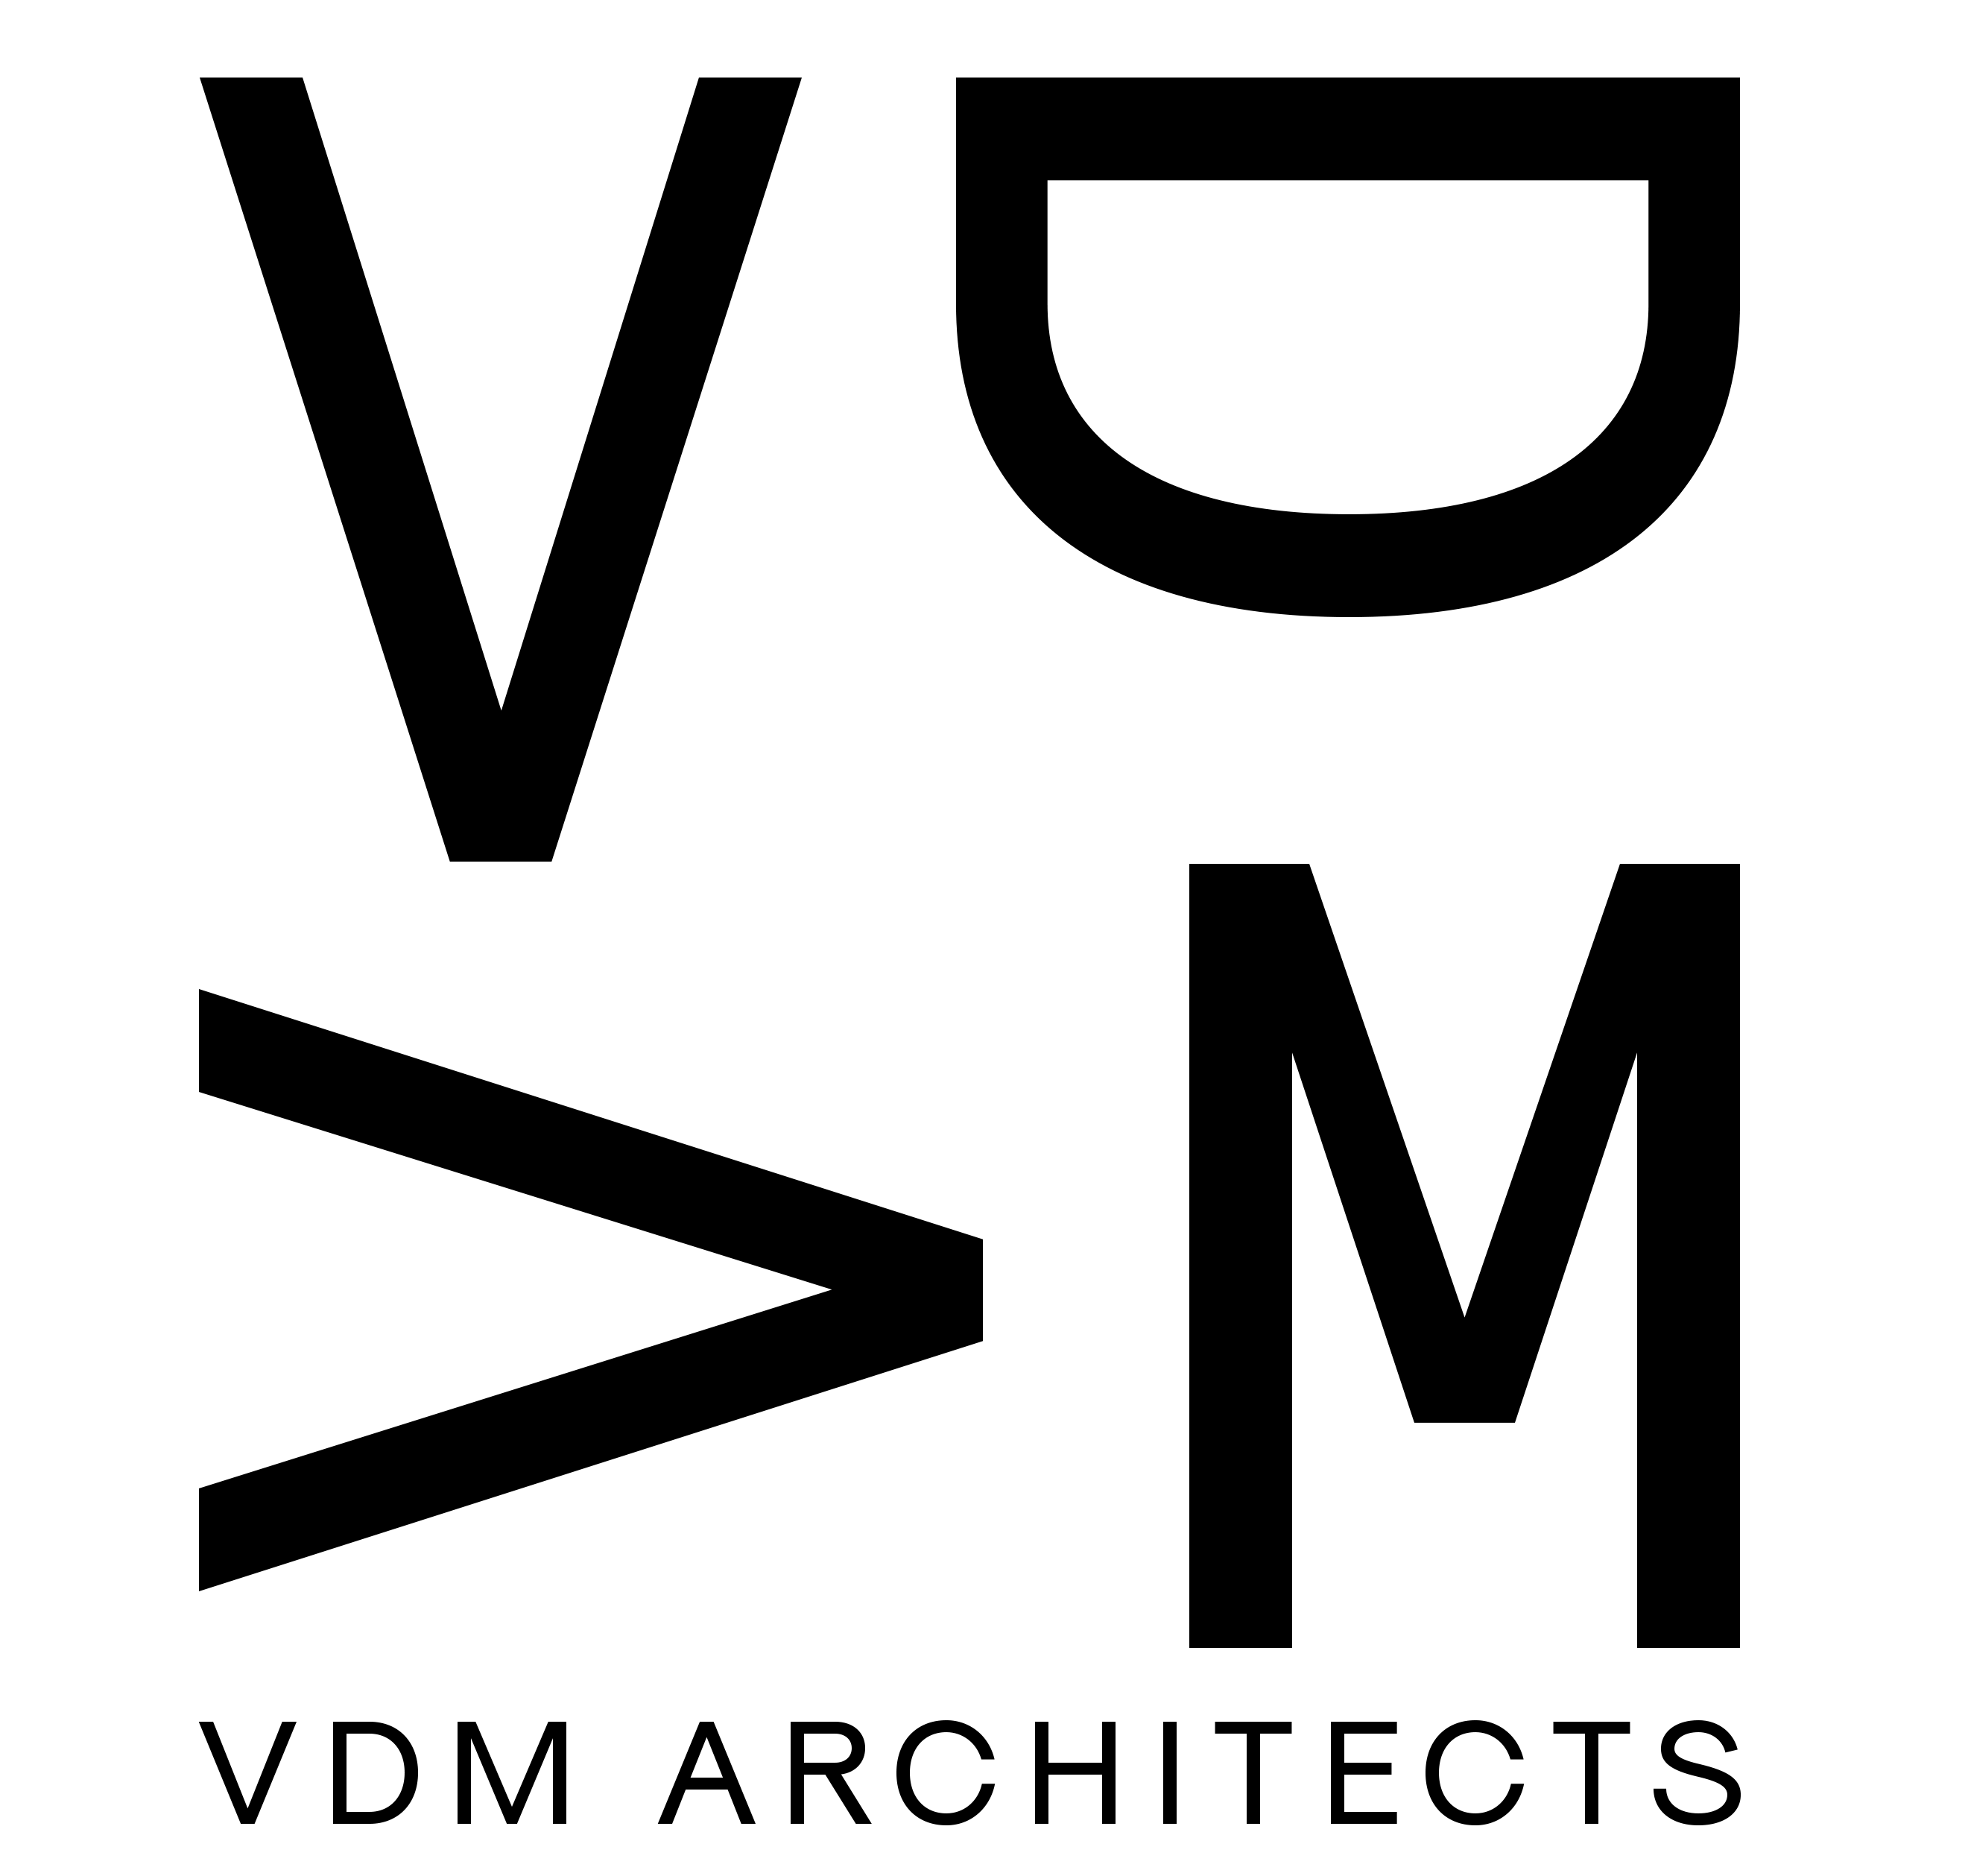 VDM logo - black